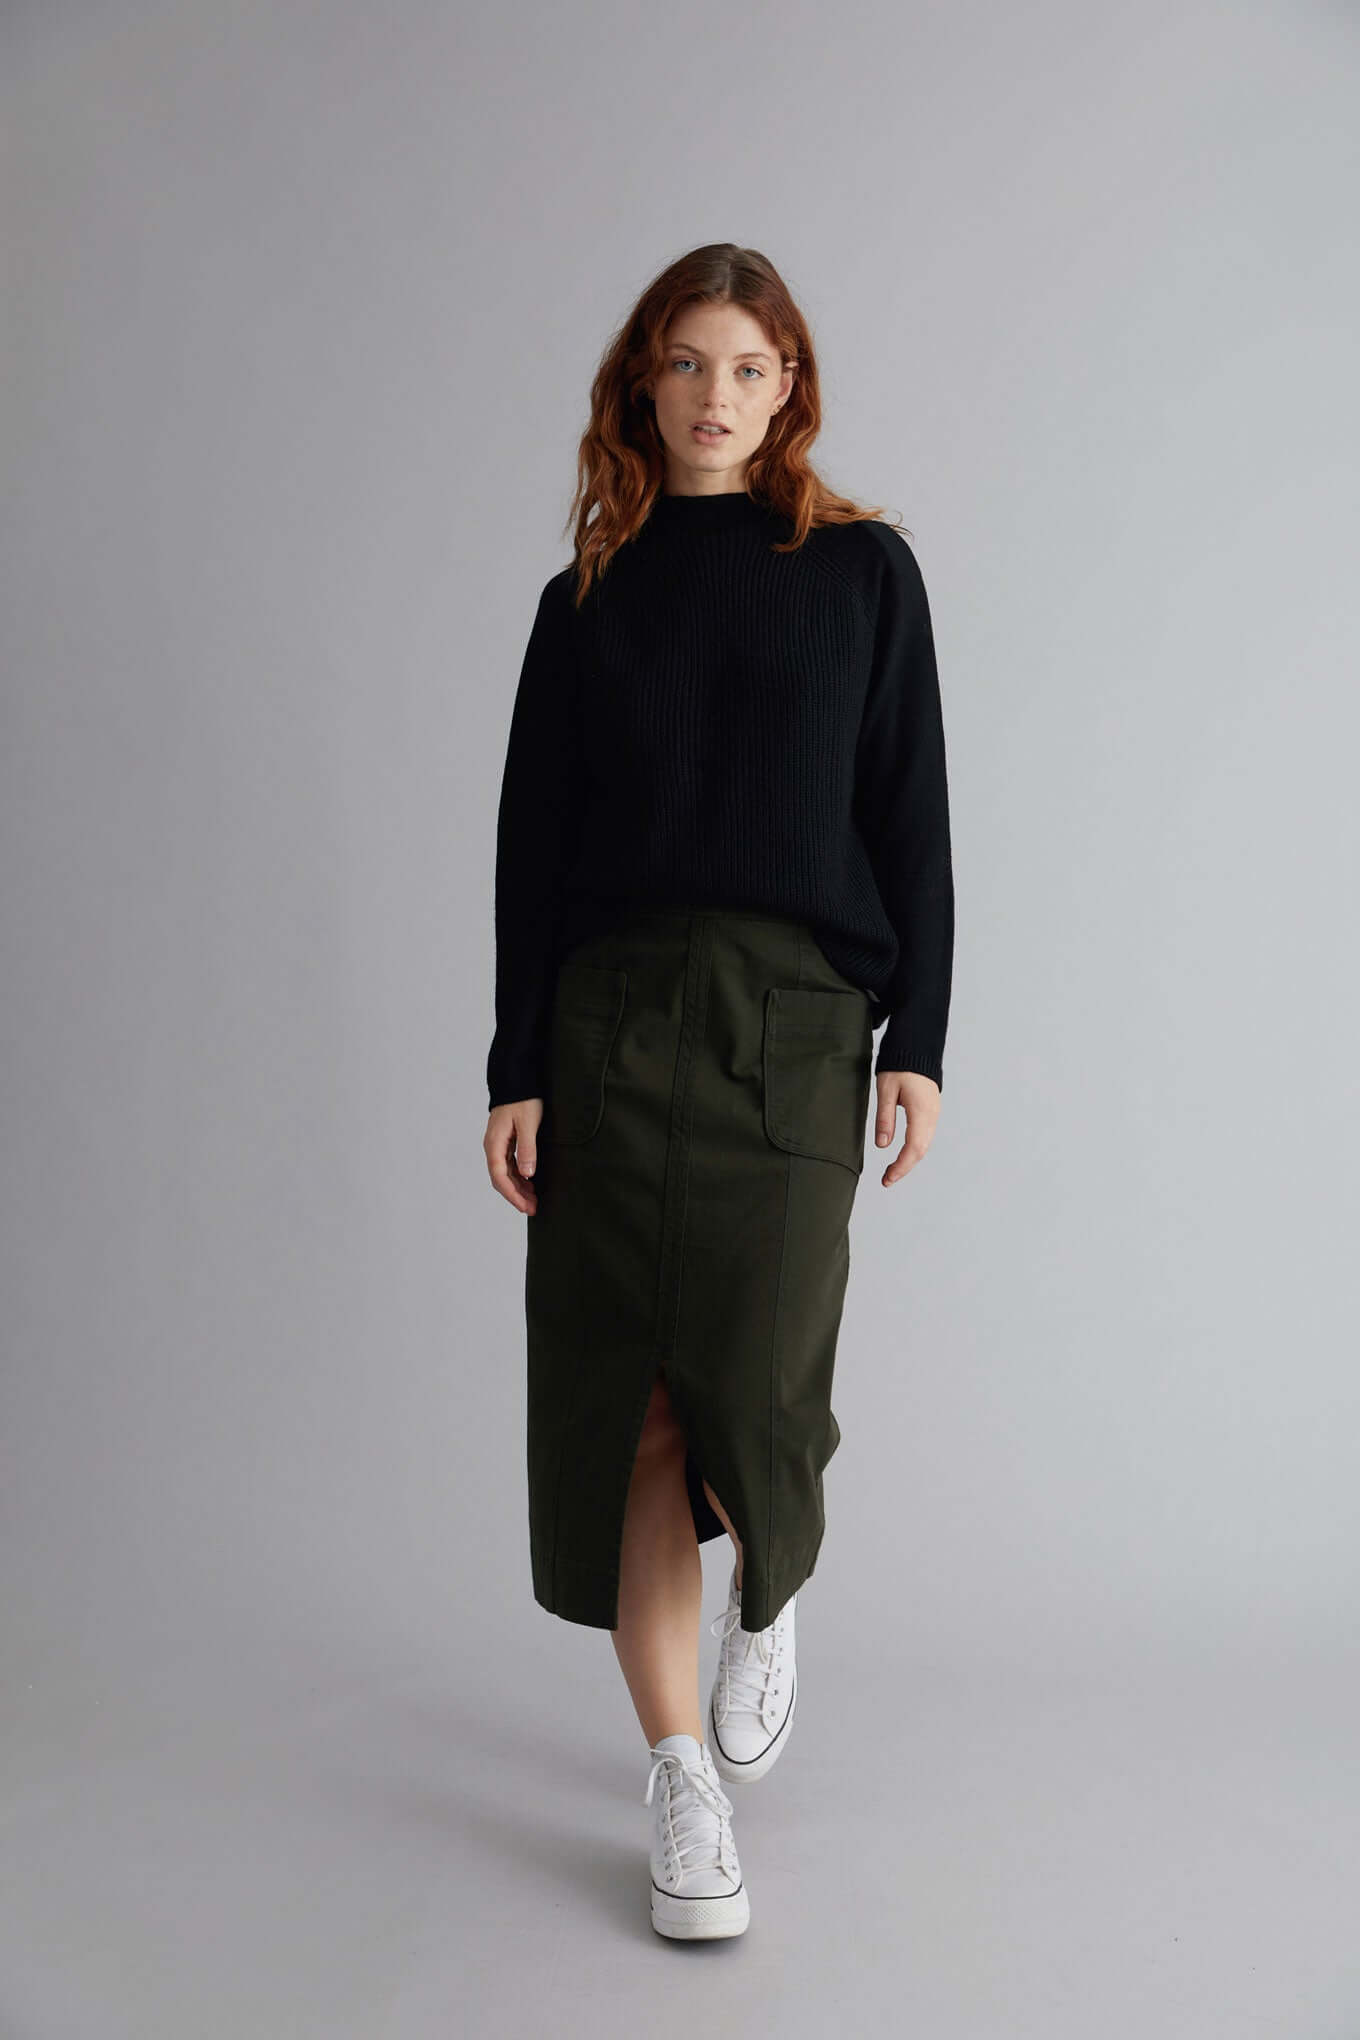 SORA Womens Organic Cotton Midi Skirt Khaki, Size 1 / UK 8 / EUR 36